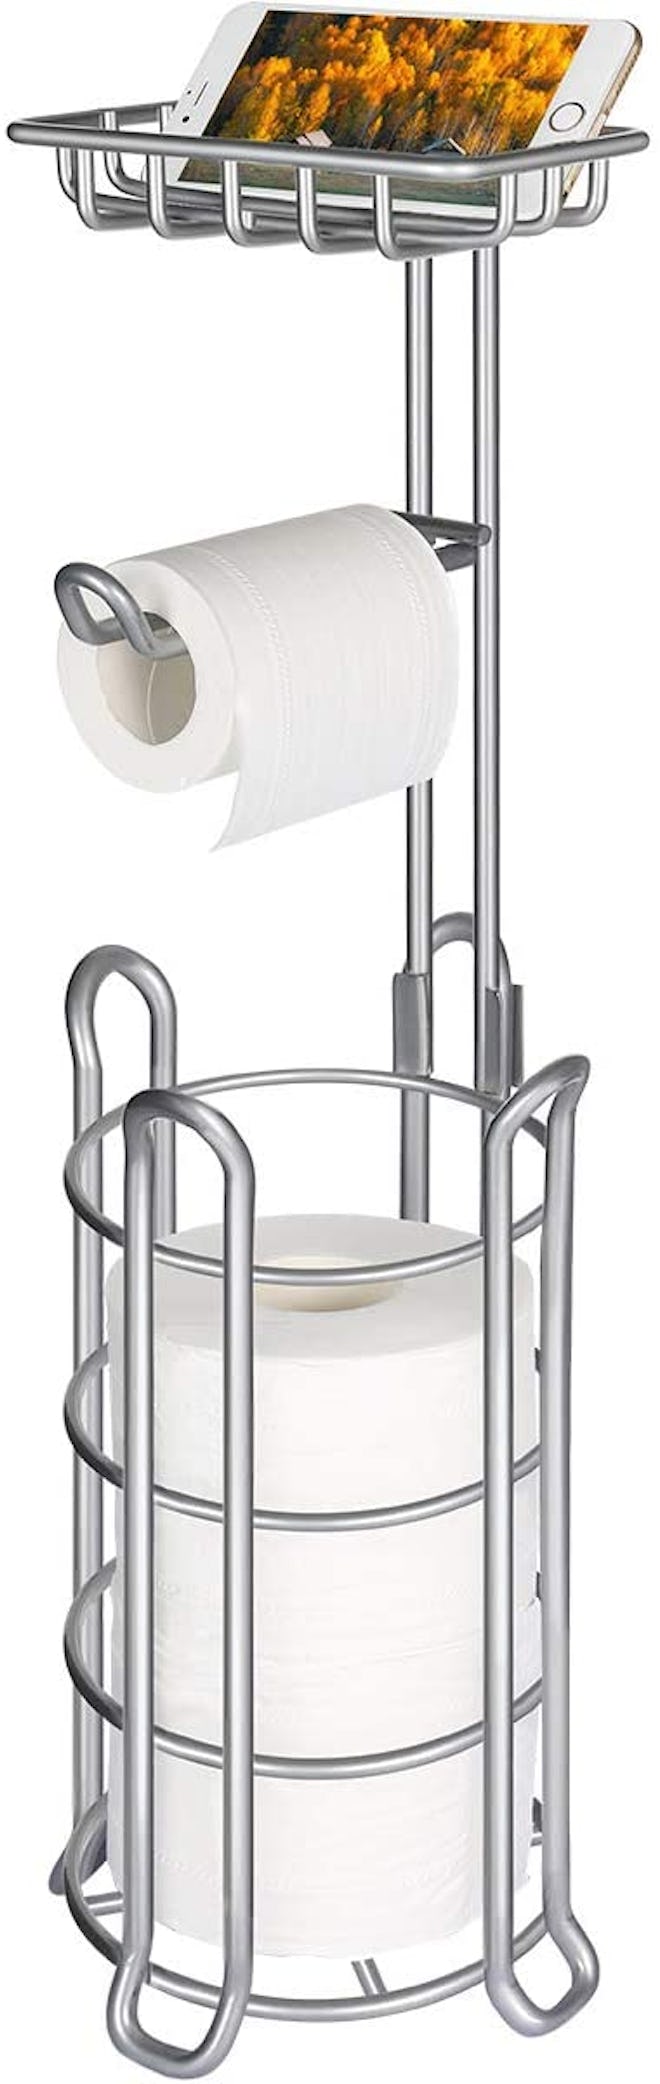 TomCare Toilet Paper Holder